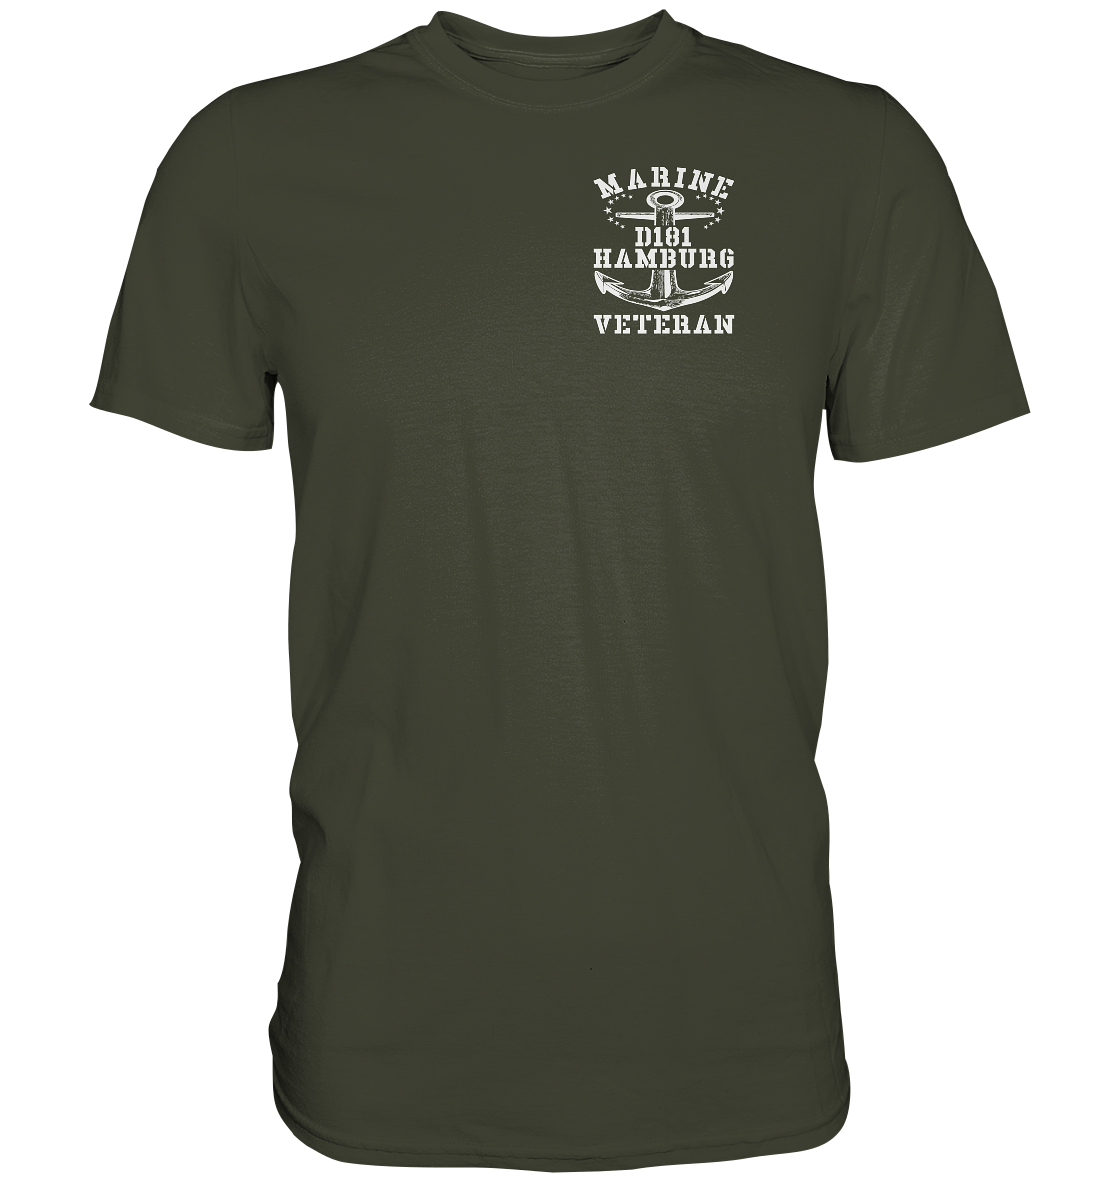 D181 Zerstörer HAMBURG Marine Veteran Brustlogo - Premium Shirt